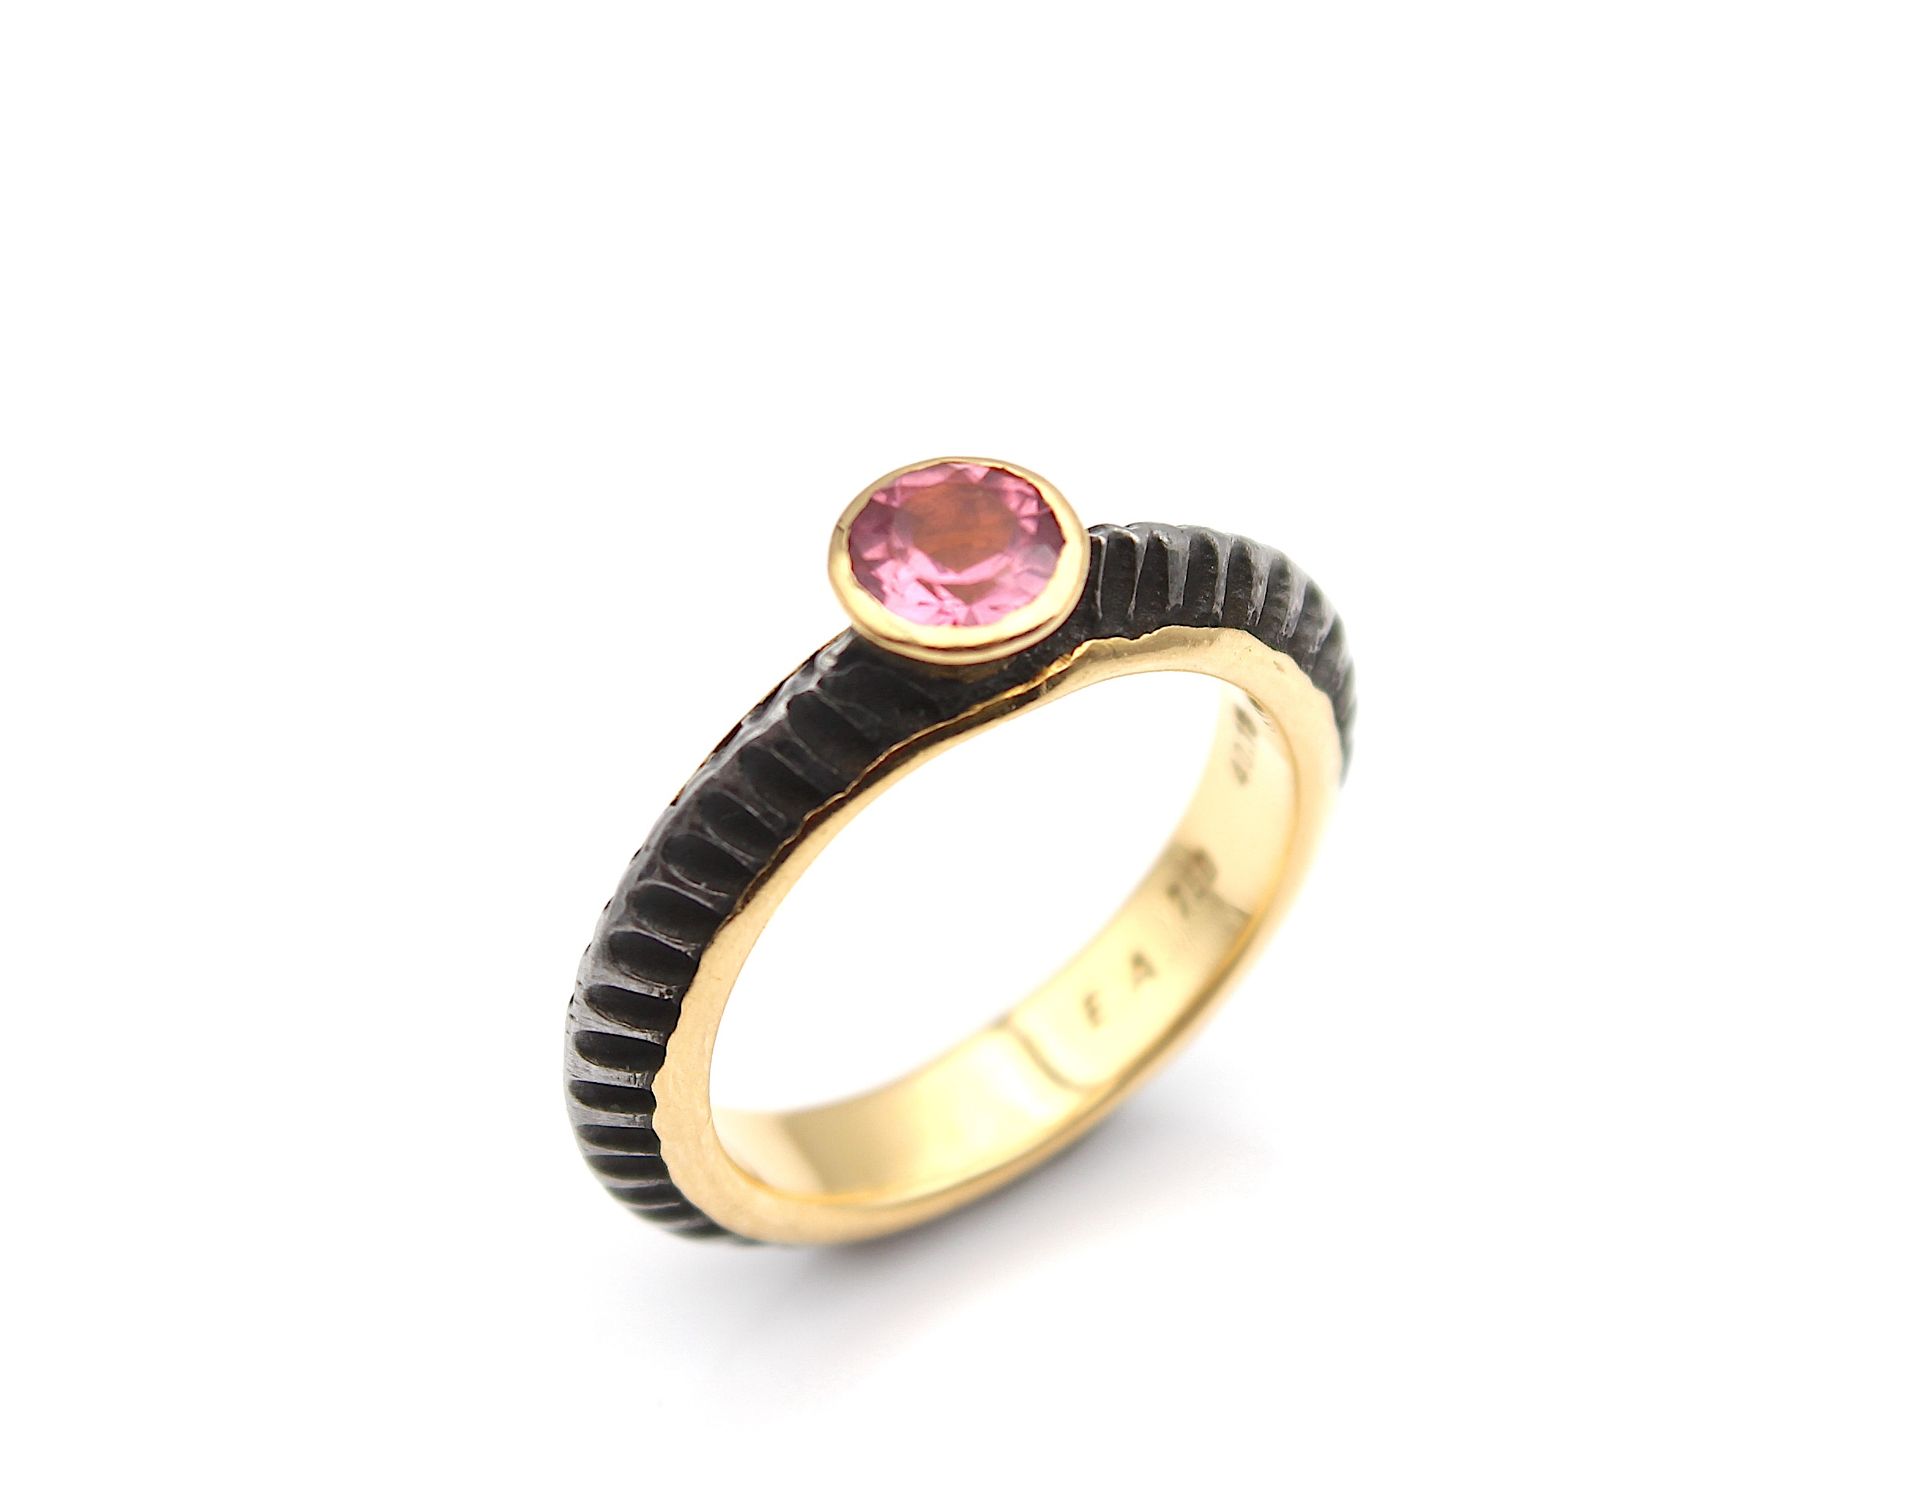 Stylish gold and iron ring with pink tourmaline - Image 2 of 4